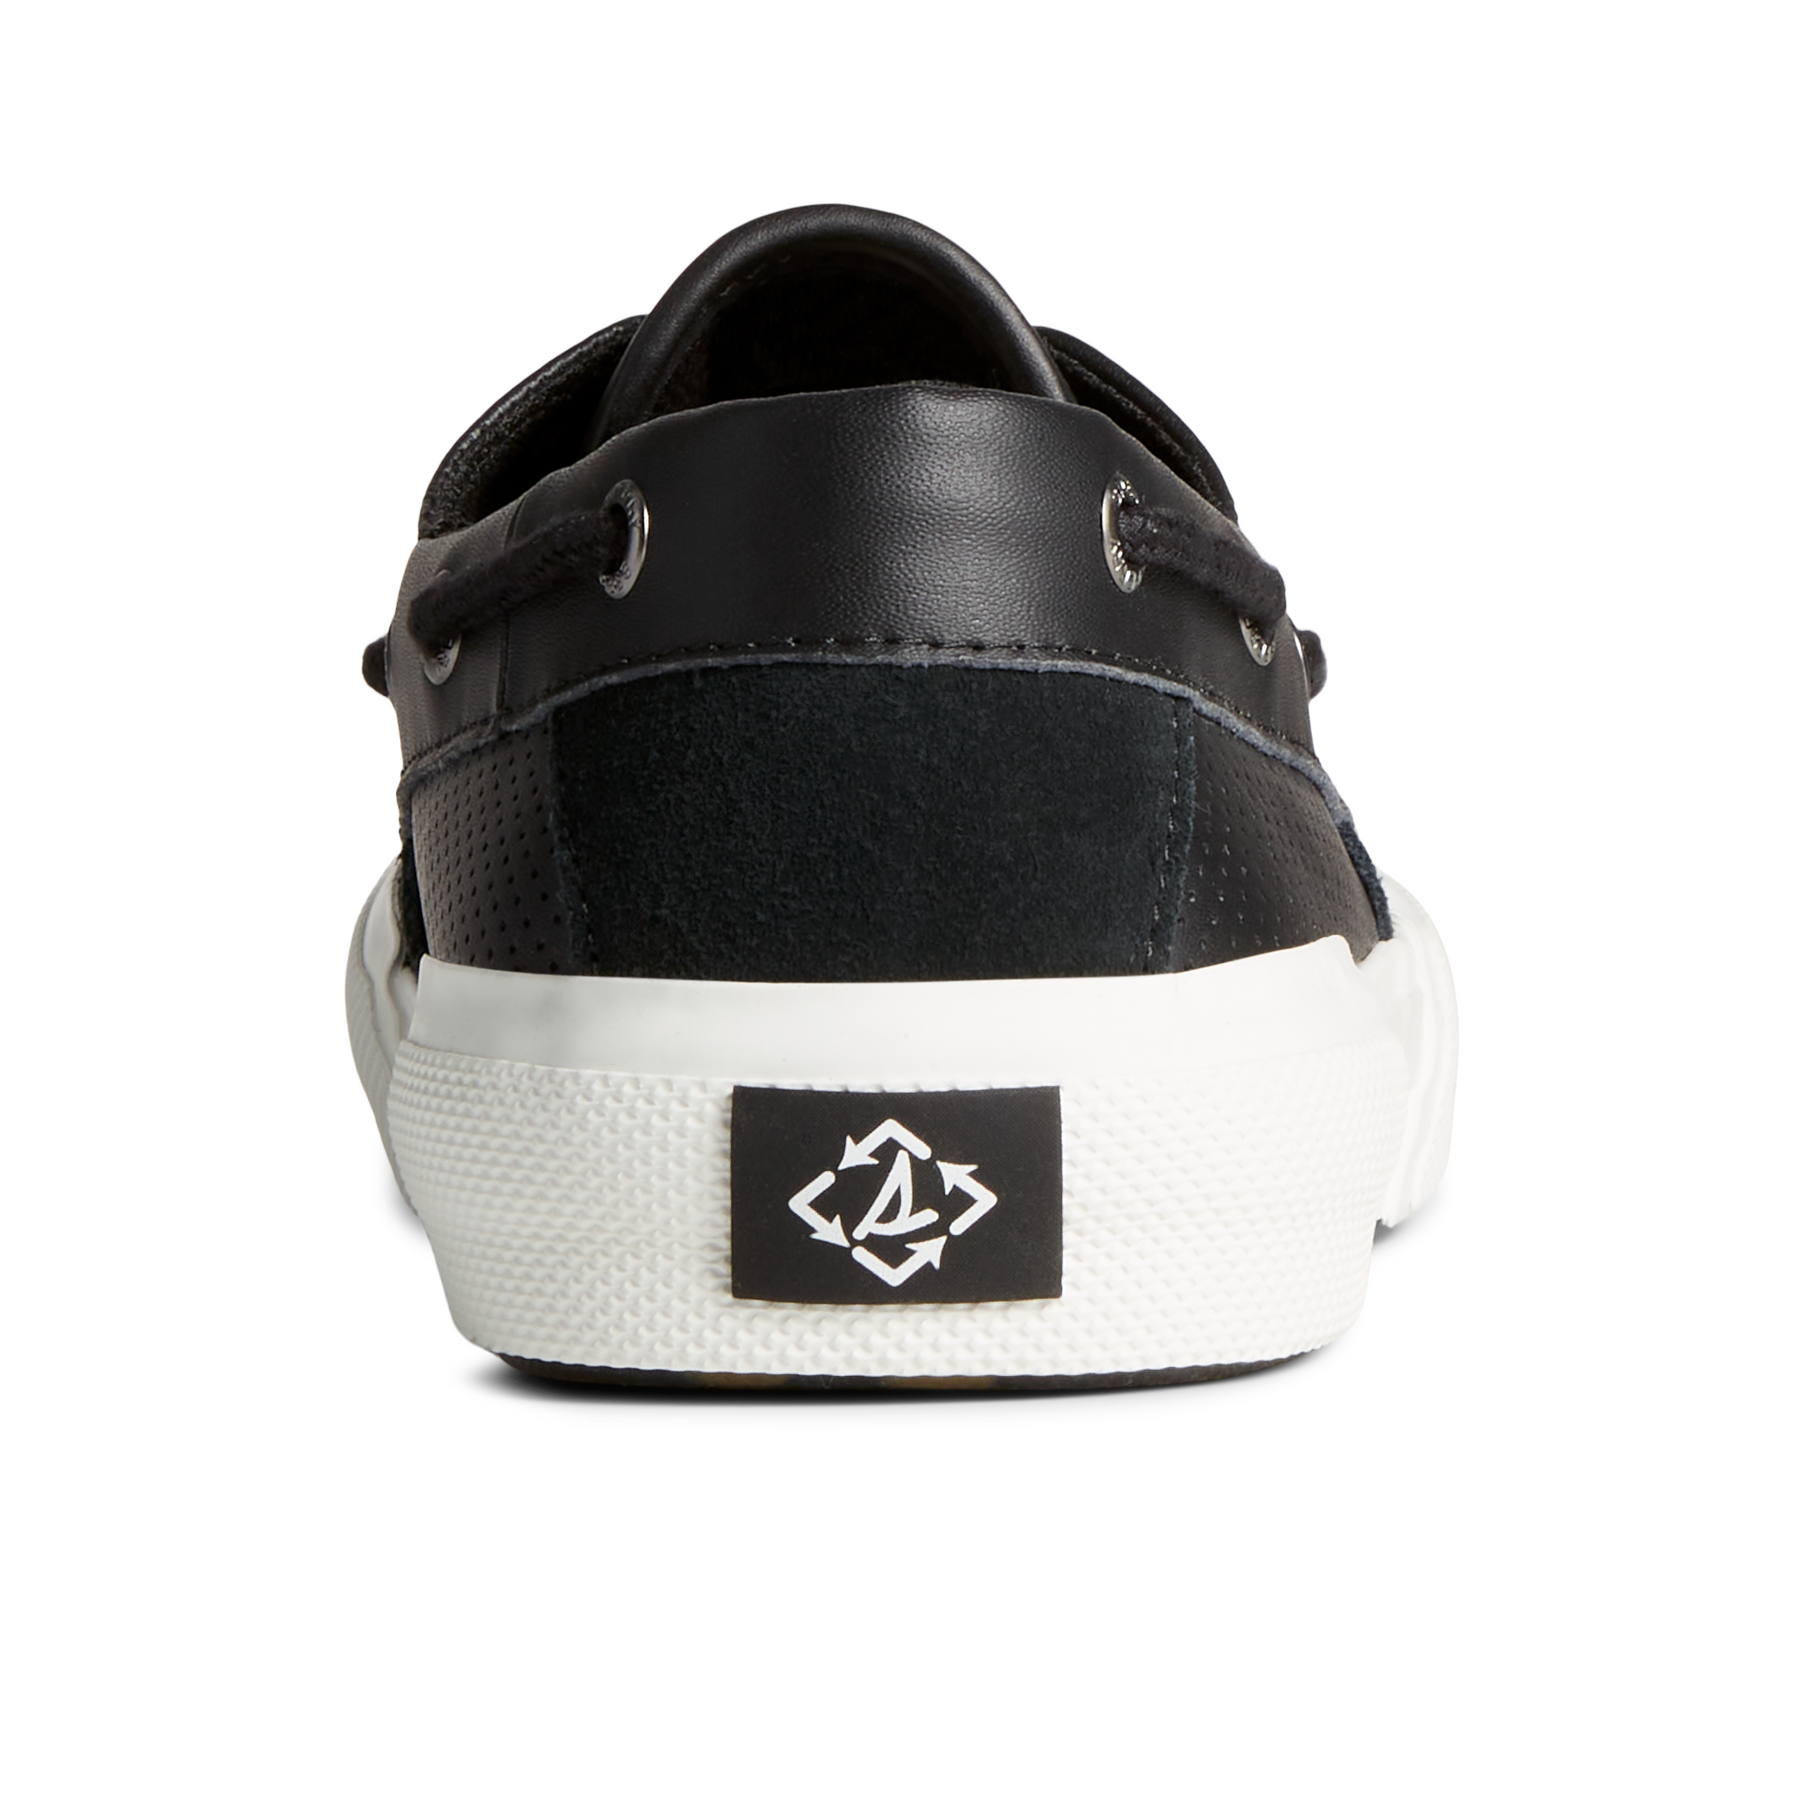 Sperry Men's SeaCycled™ Soletide 2-Eye Sneaker - Black (STS24687)